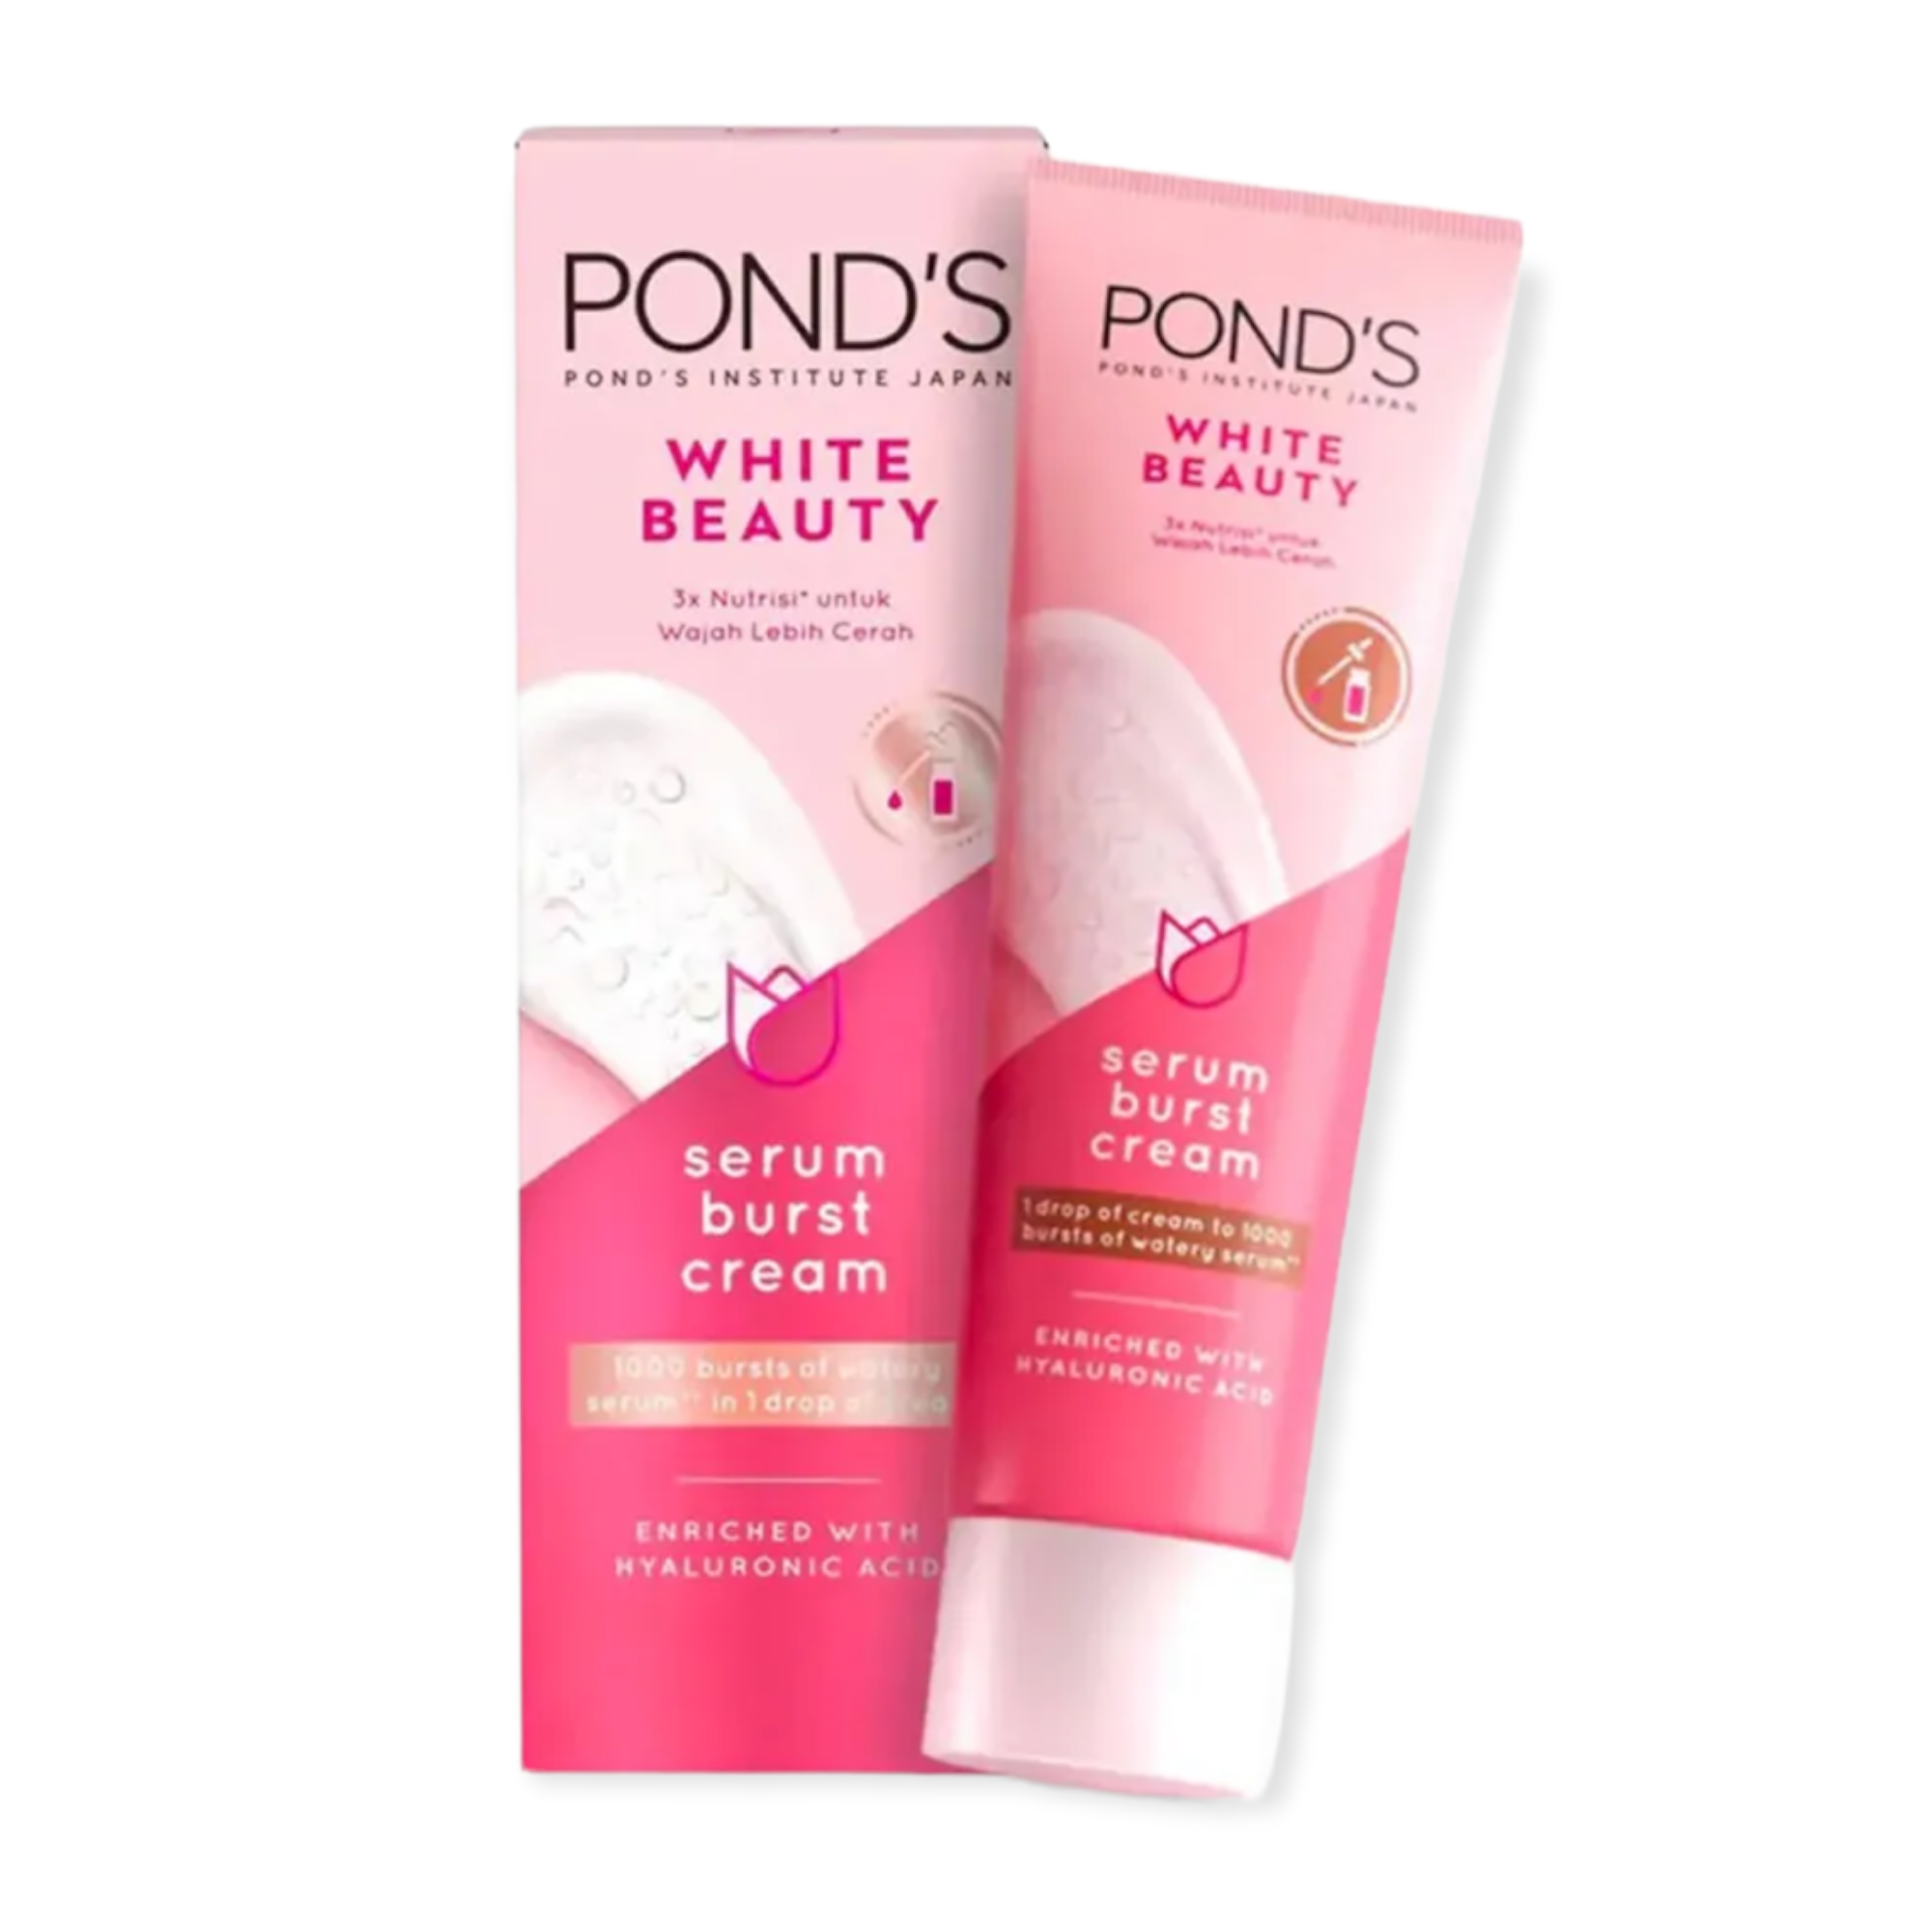 Pond’s White Beauty Serum Burst Cream 20g